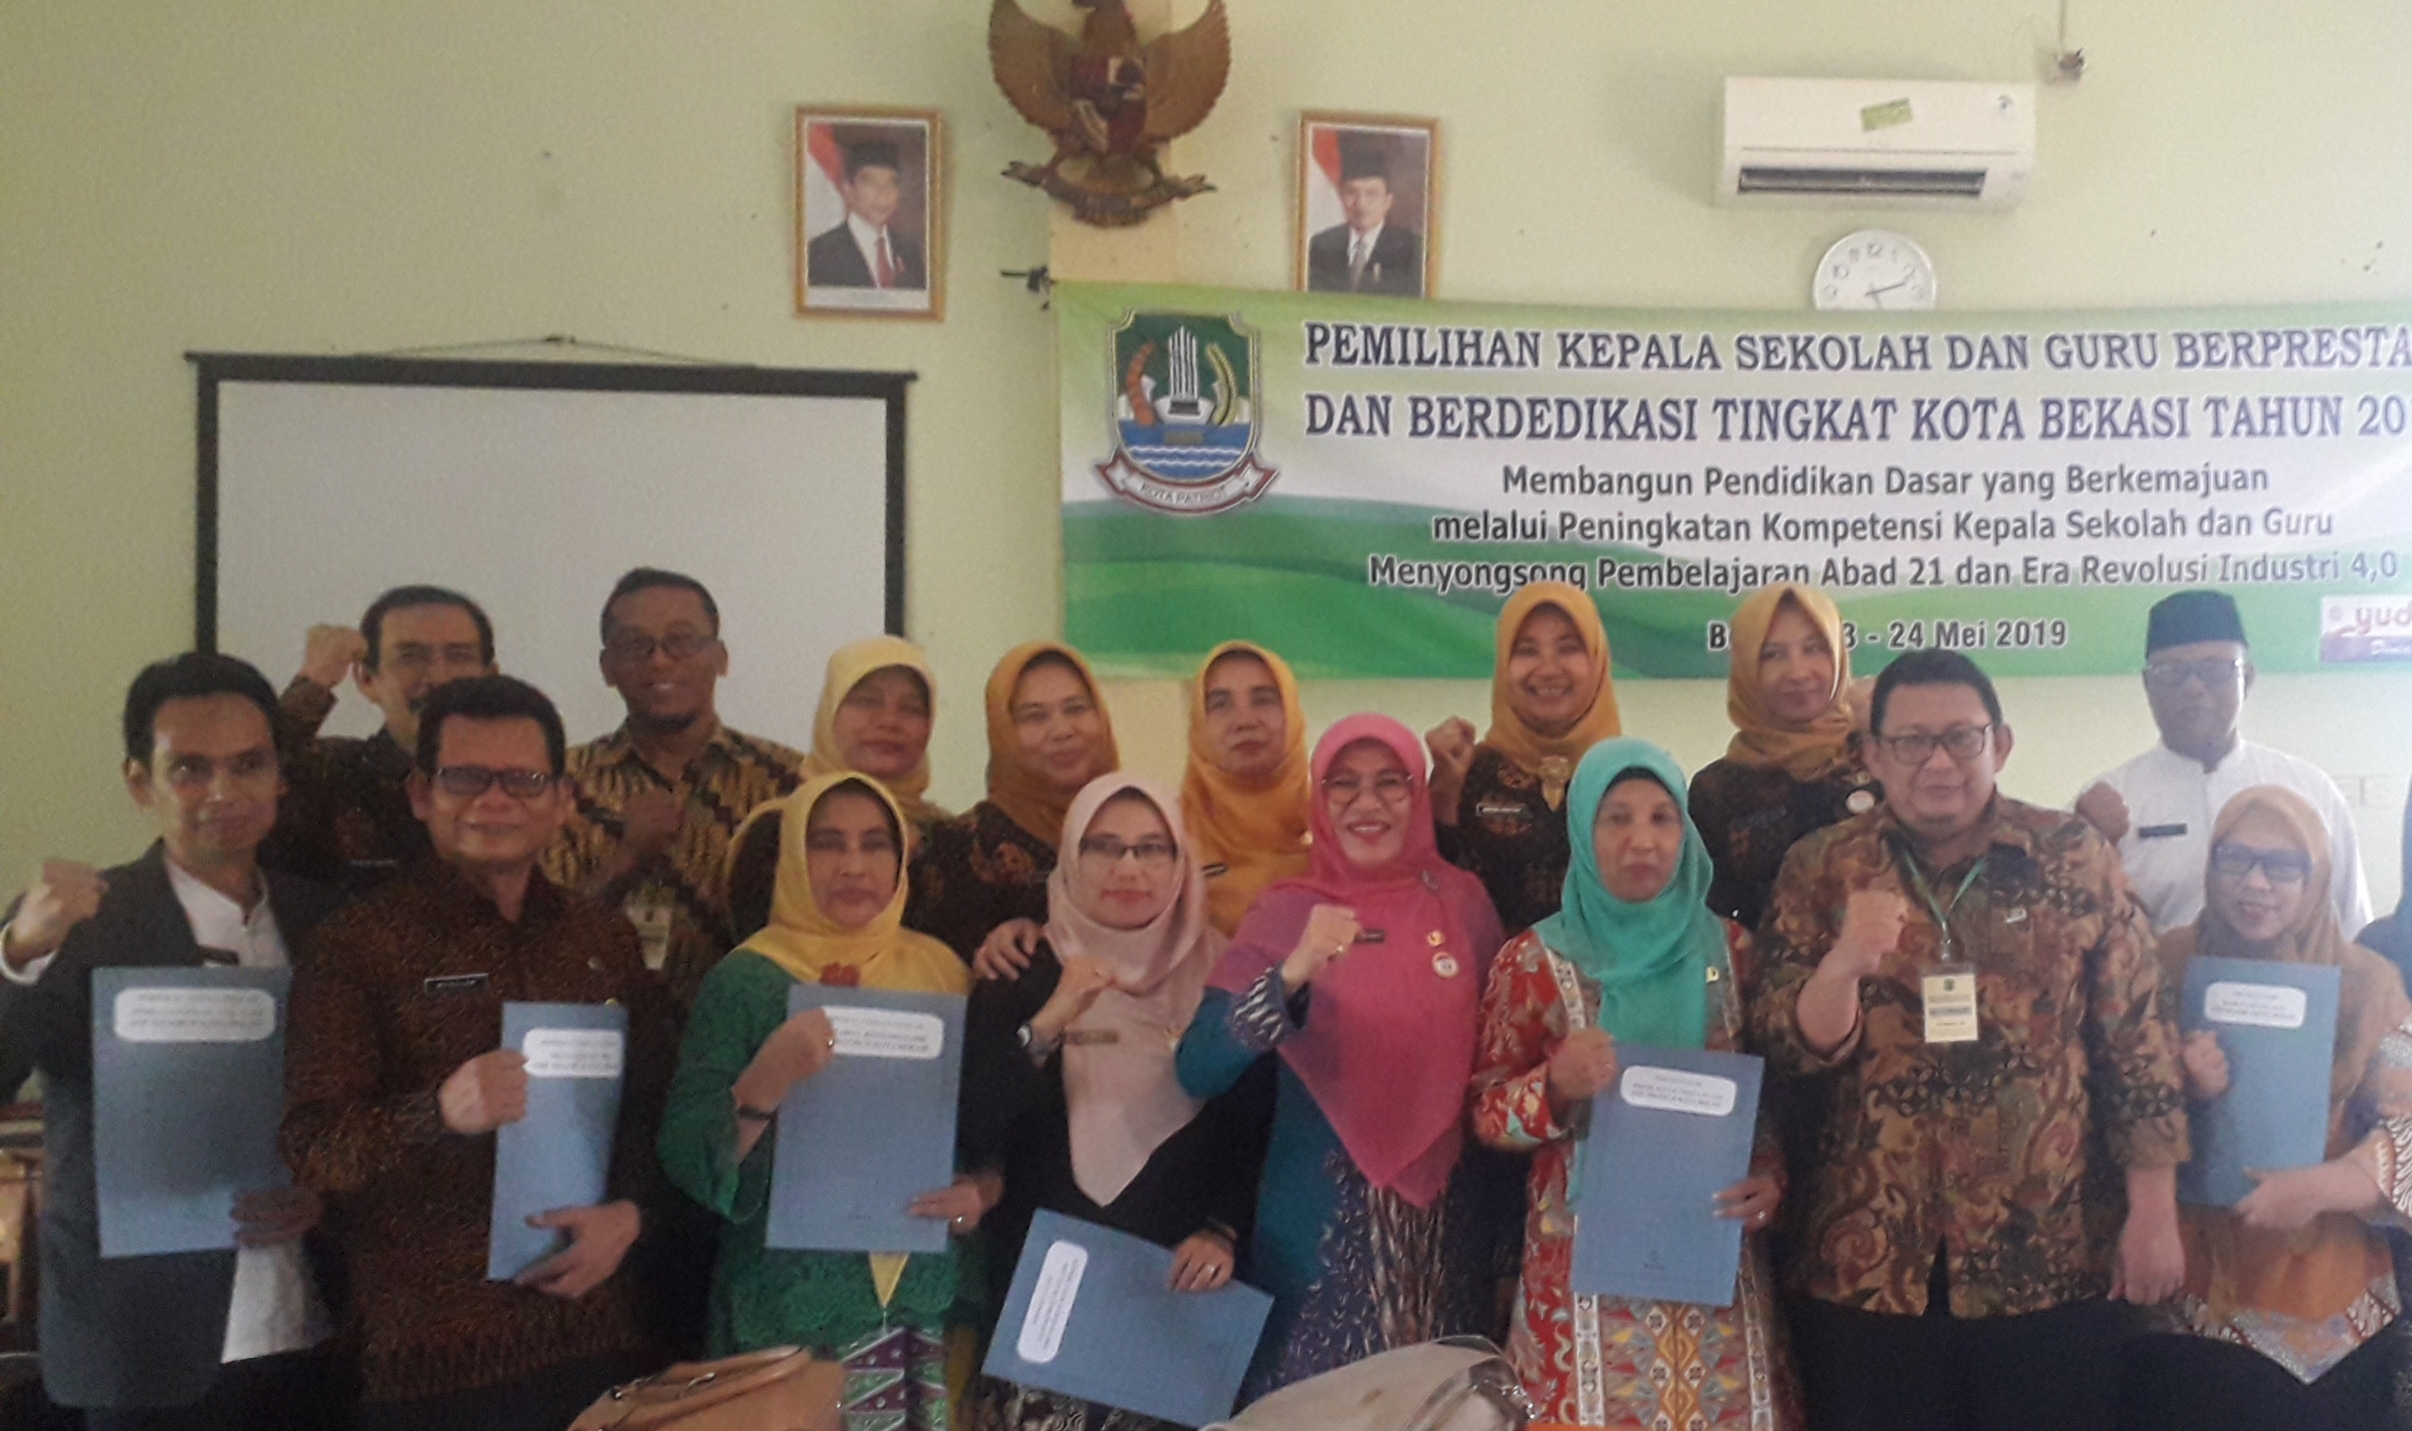 Dinas Pendidikan Kota Bekasi sukses menggelar lomba guru dan Kepala Sekolah berprestasi jenjang SD d0